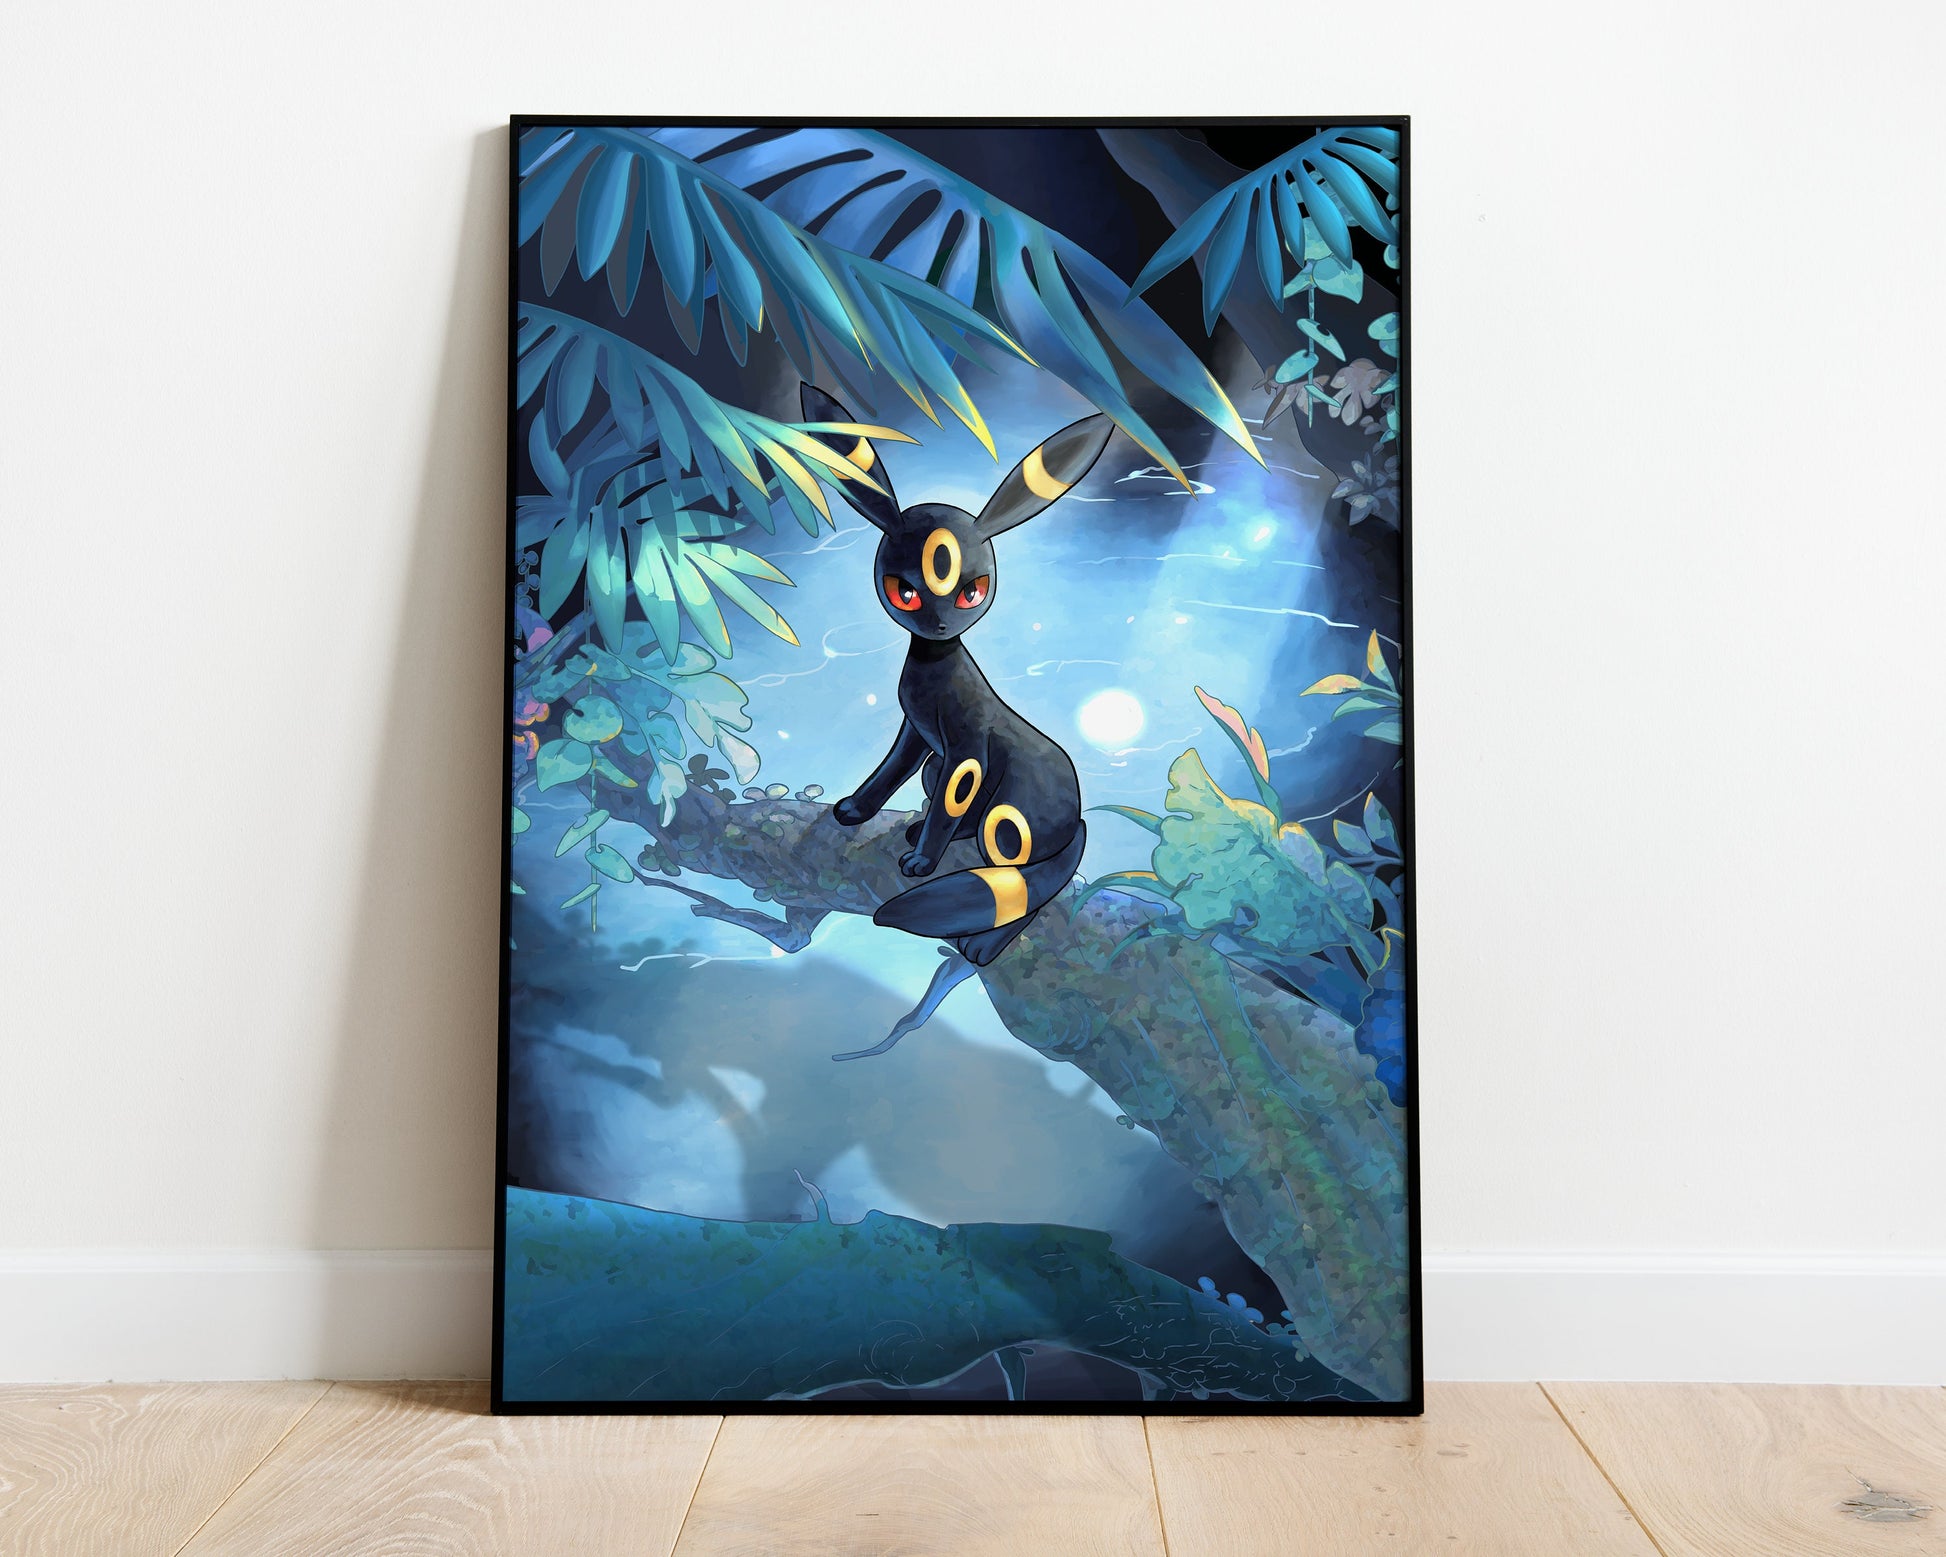 Poster of Eeveelution Umbreon - Pokemon Art - Umbreon Print - Wall Art - Pokemon Card Art Work - Pokemon Poster - Decor